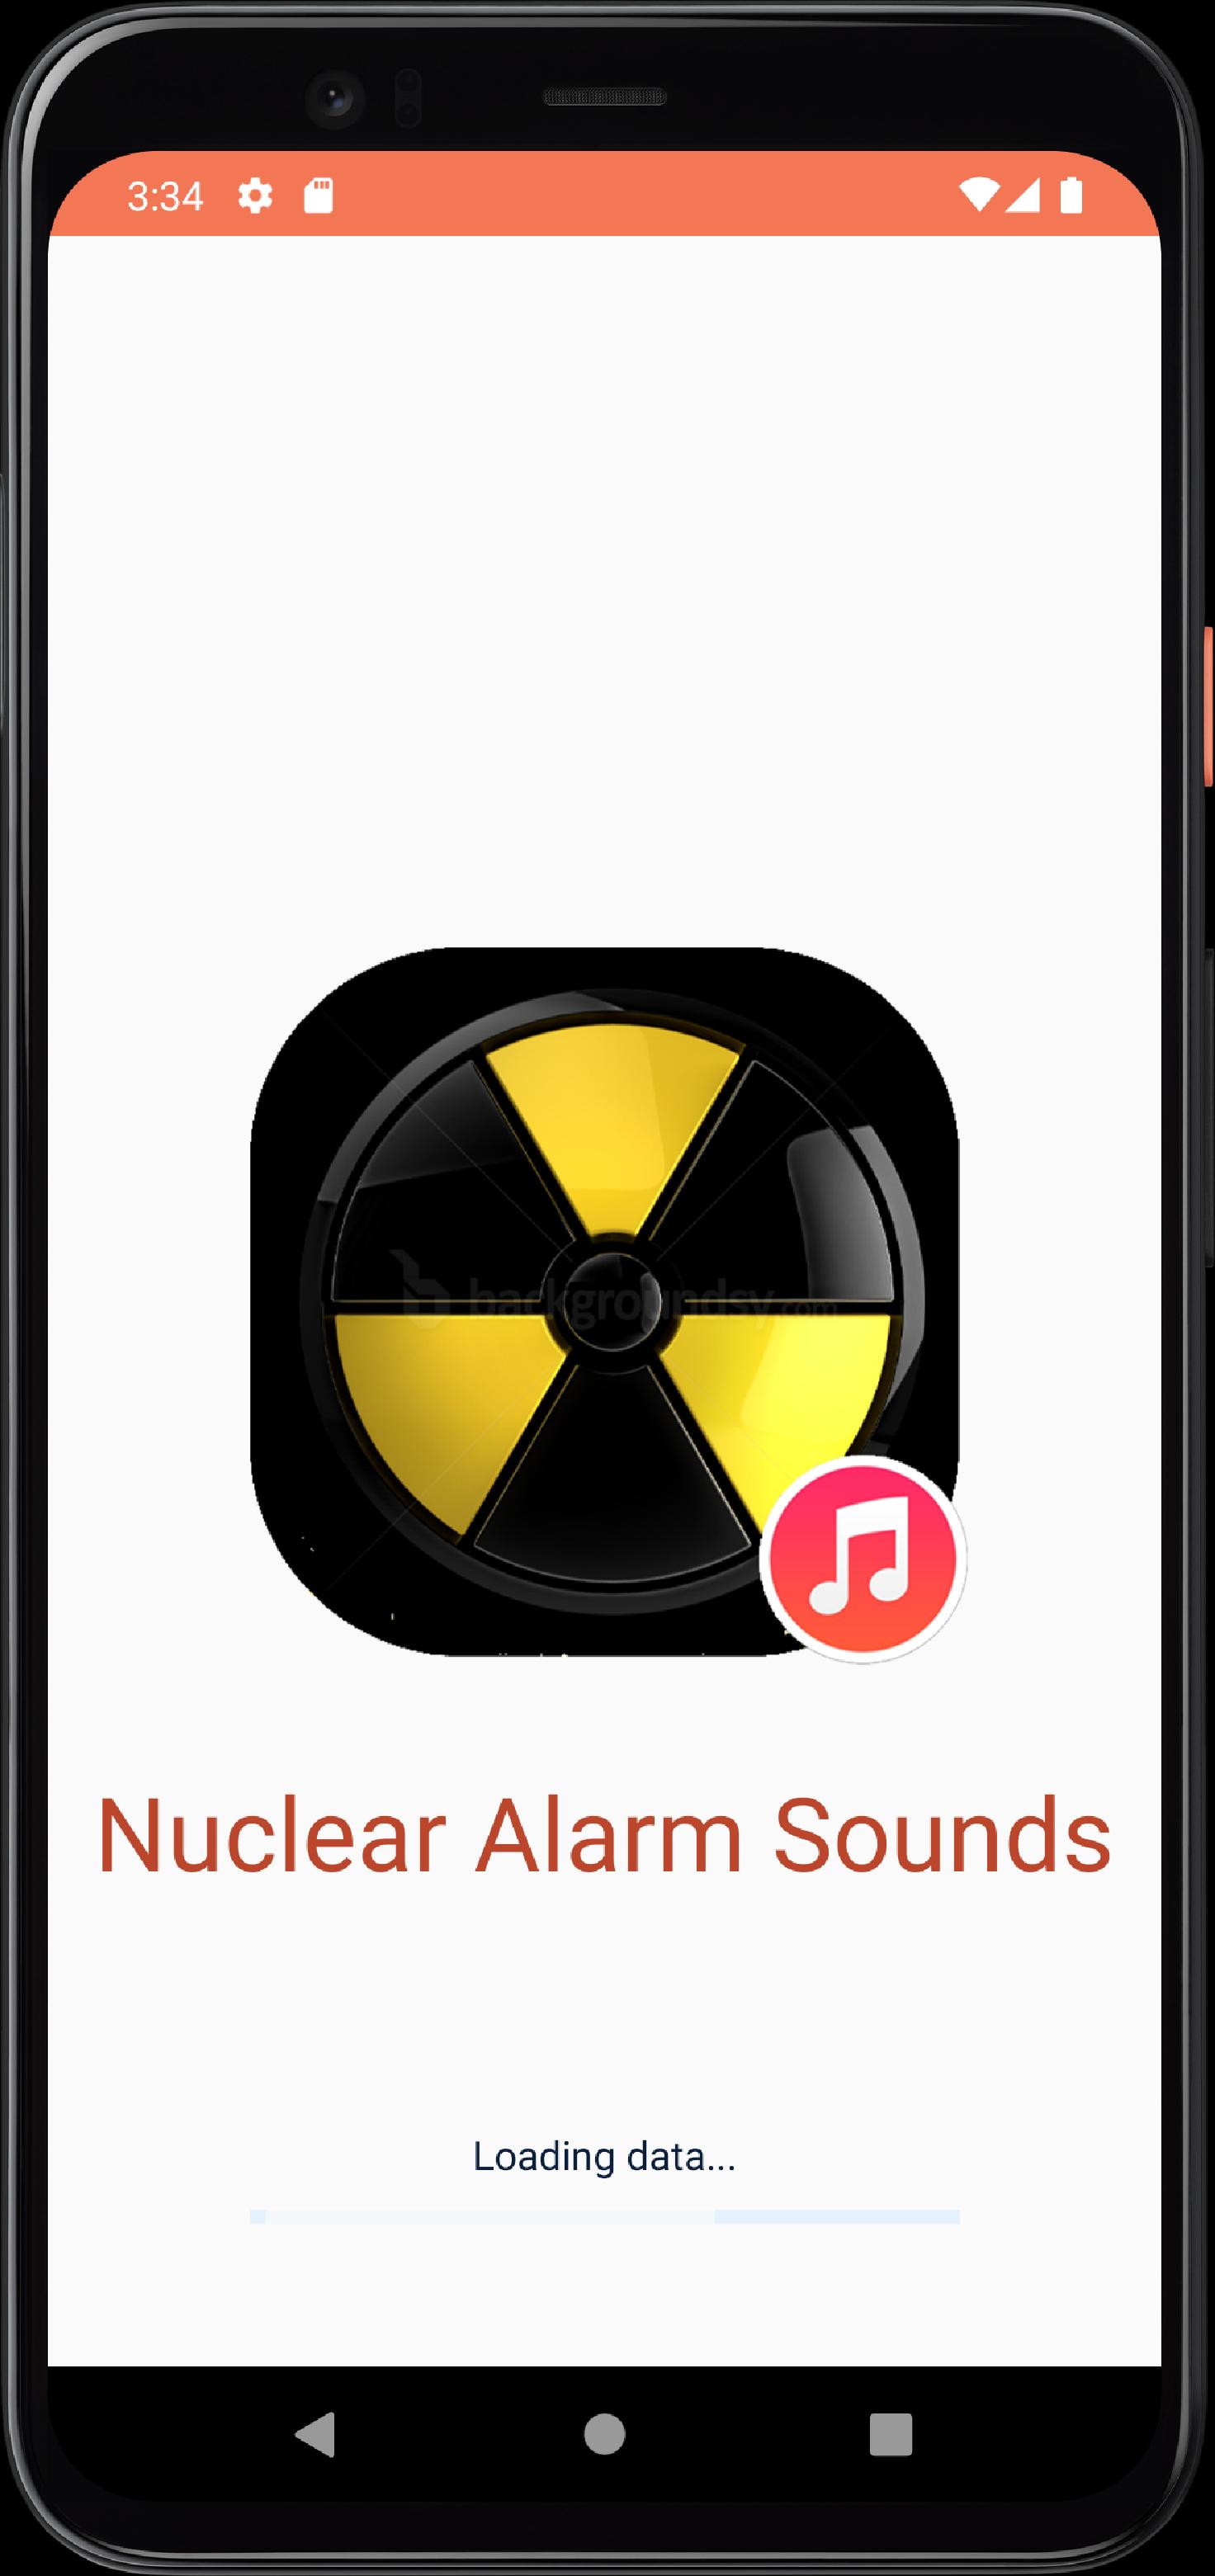 Звук тревоги короткий. Звук ядерной тревоги. Ядерная тревога. Смс ядерная тревога. Внимание ядерная тревога голос.